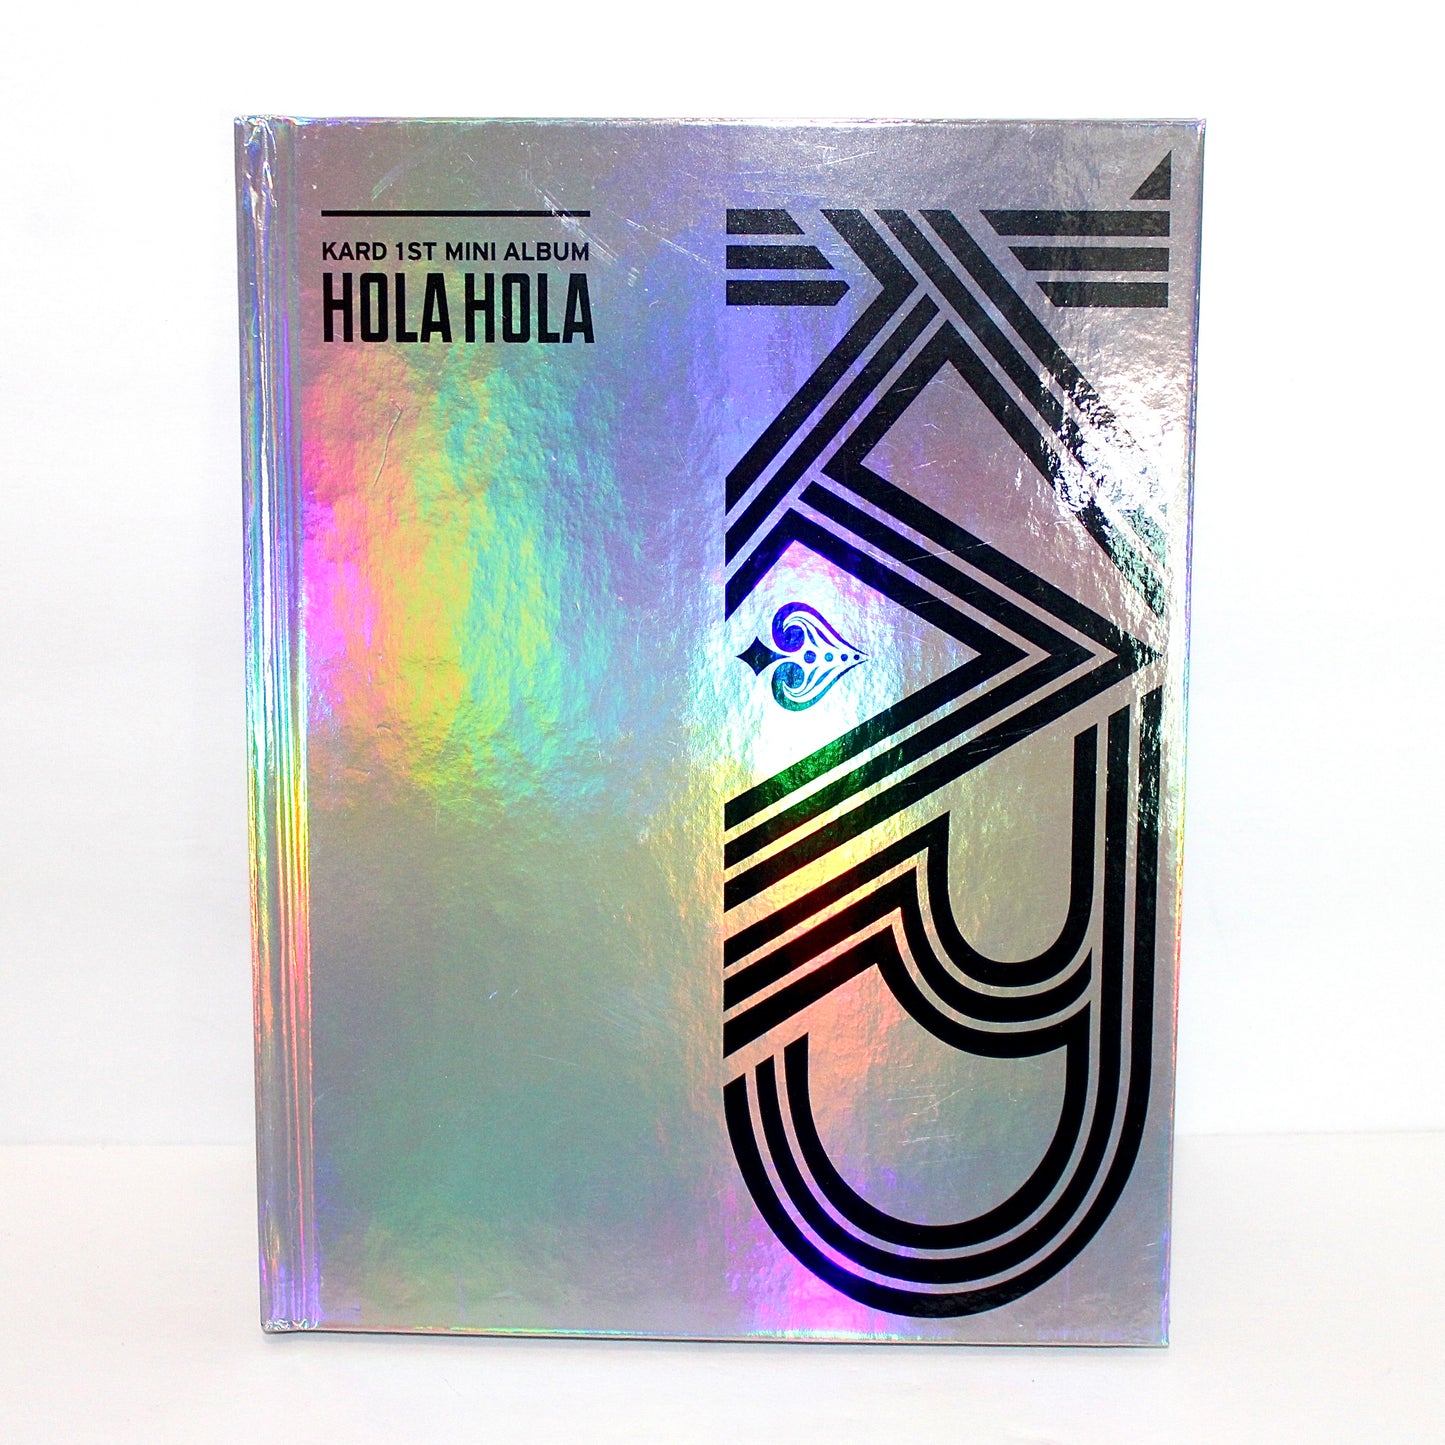 KARD 1st Mini Album: Hola Hola